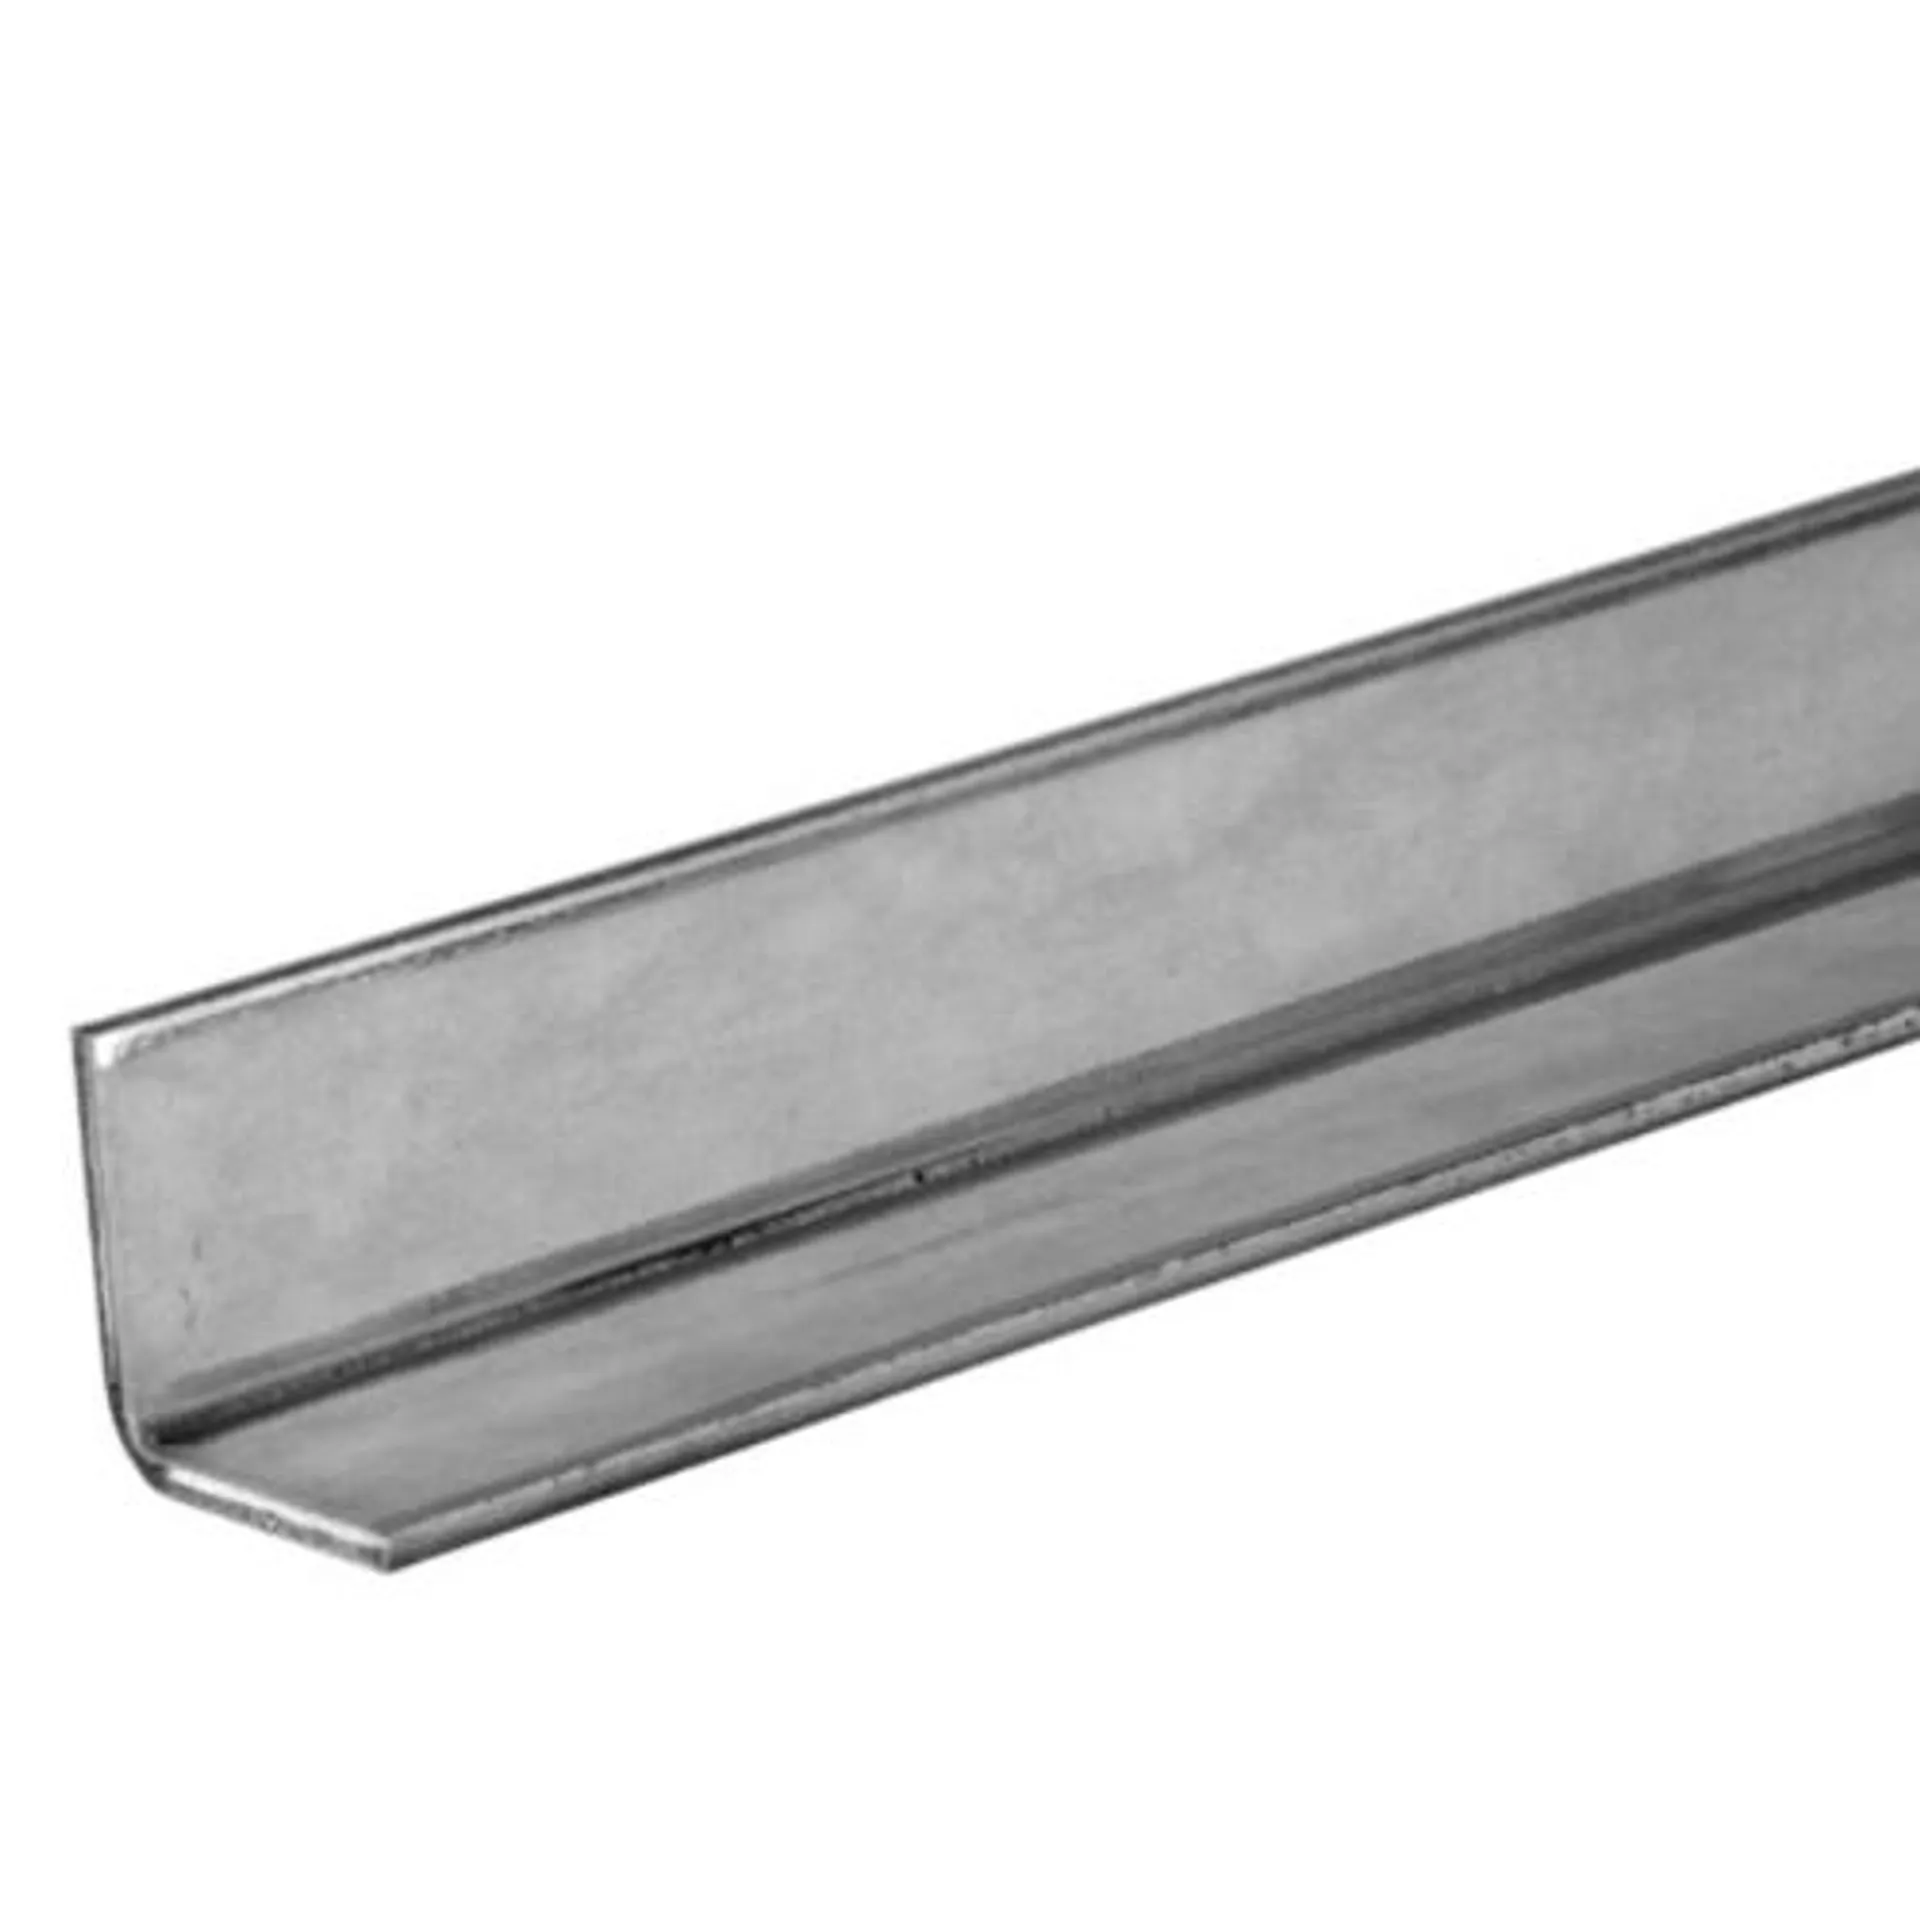 SteelWorks #11 Zinc-Plated Angle